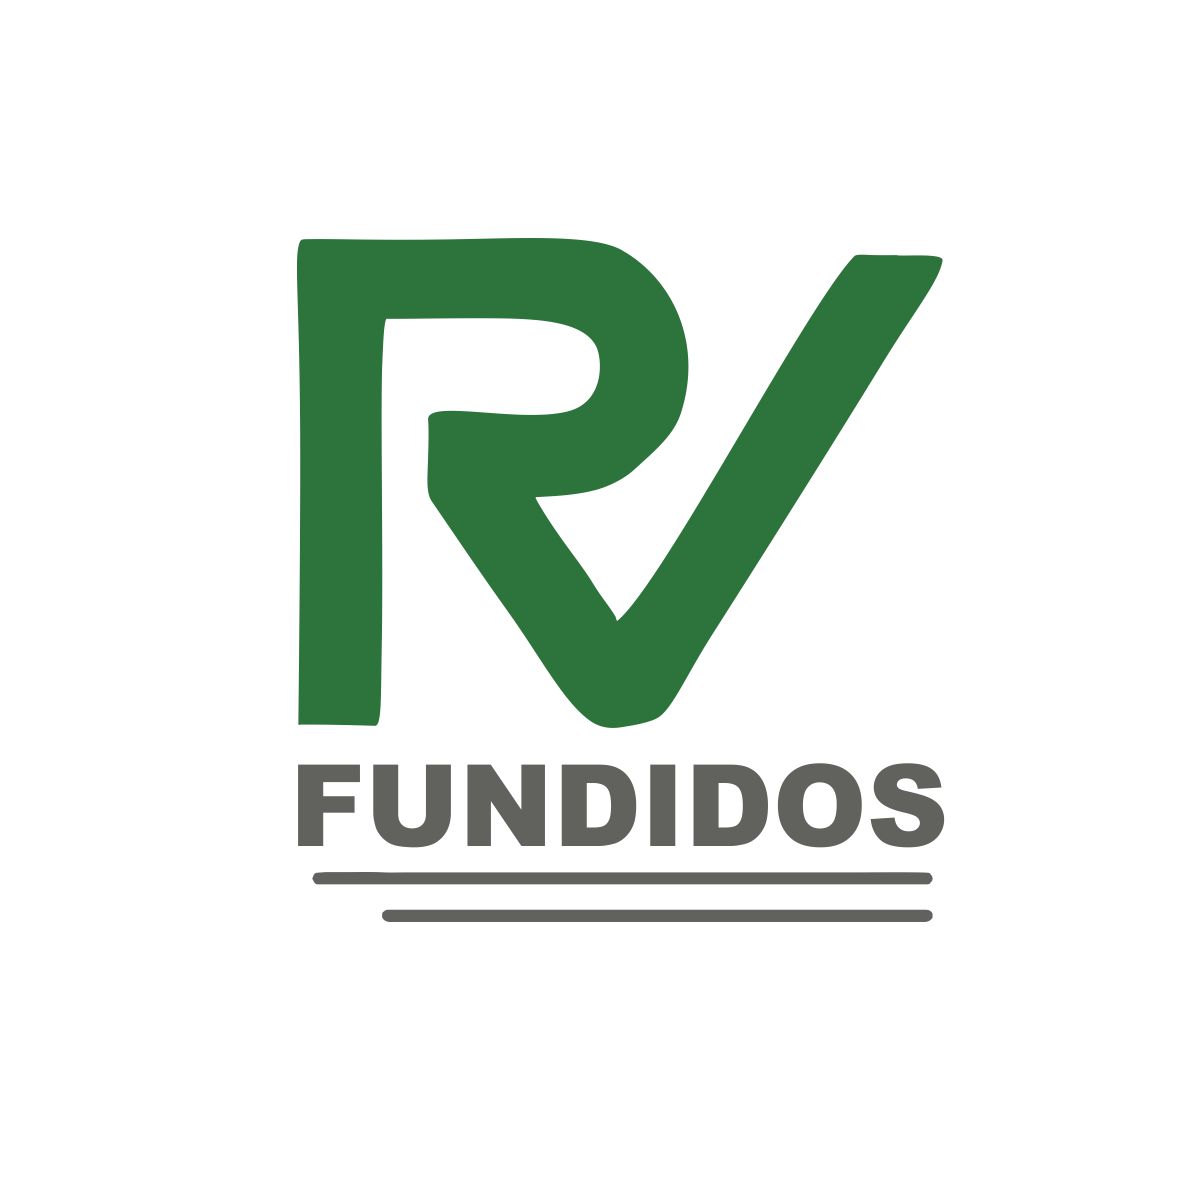 Alumil Indústria e Comércio de Fundidos Ltda (Fundidos RV)